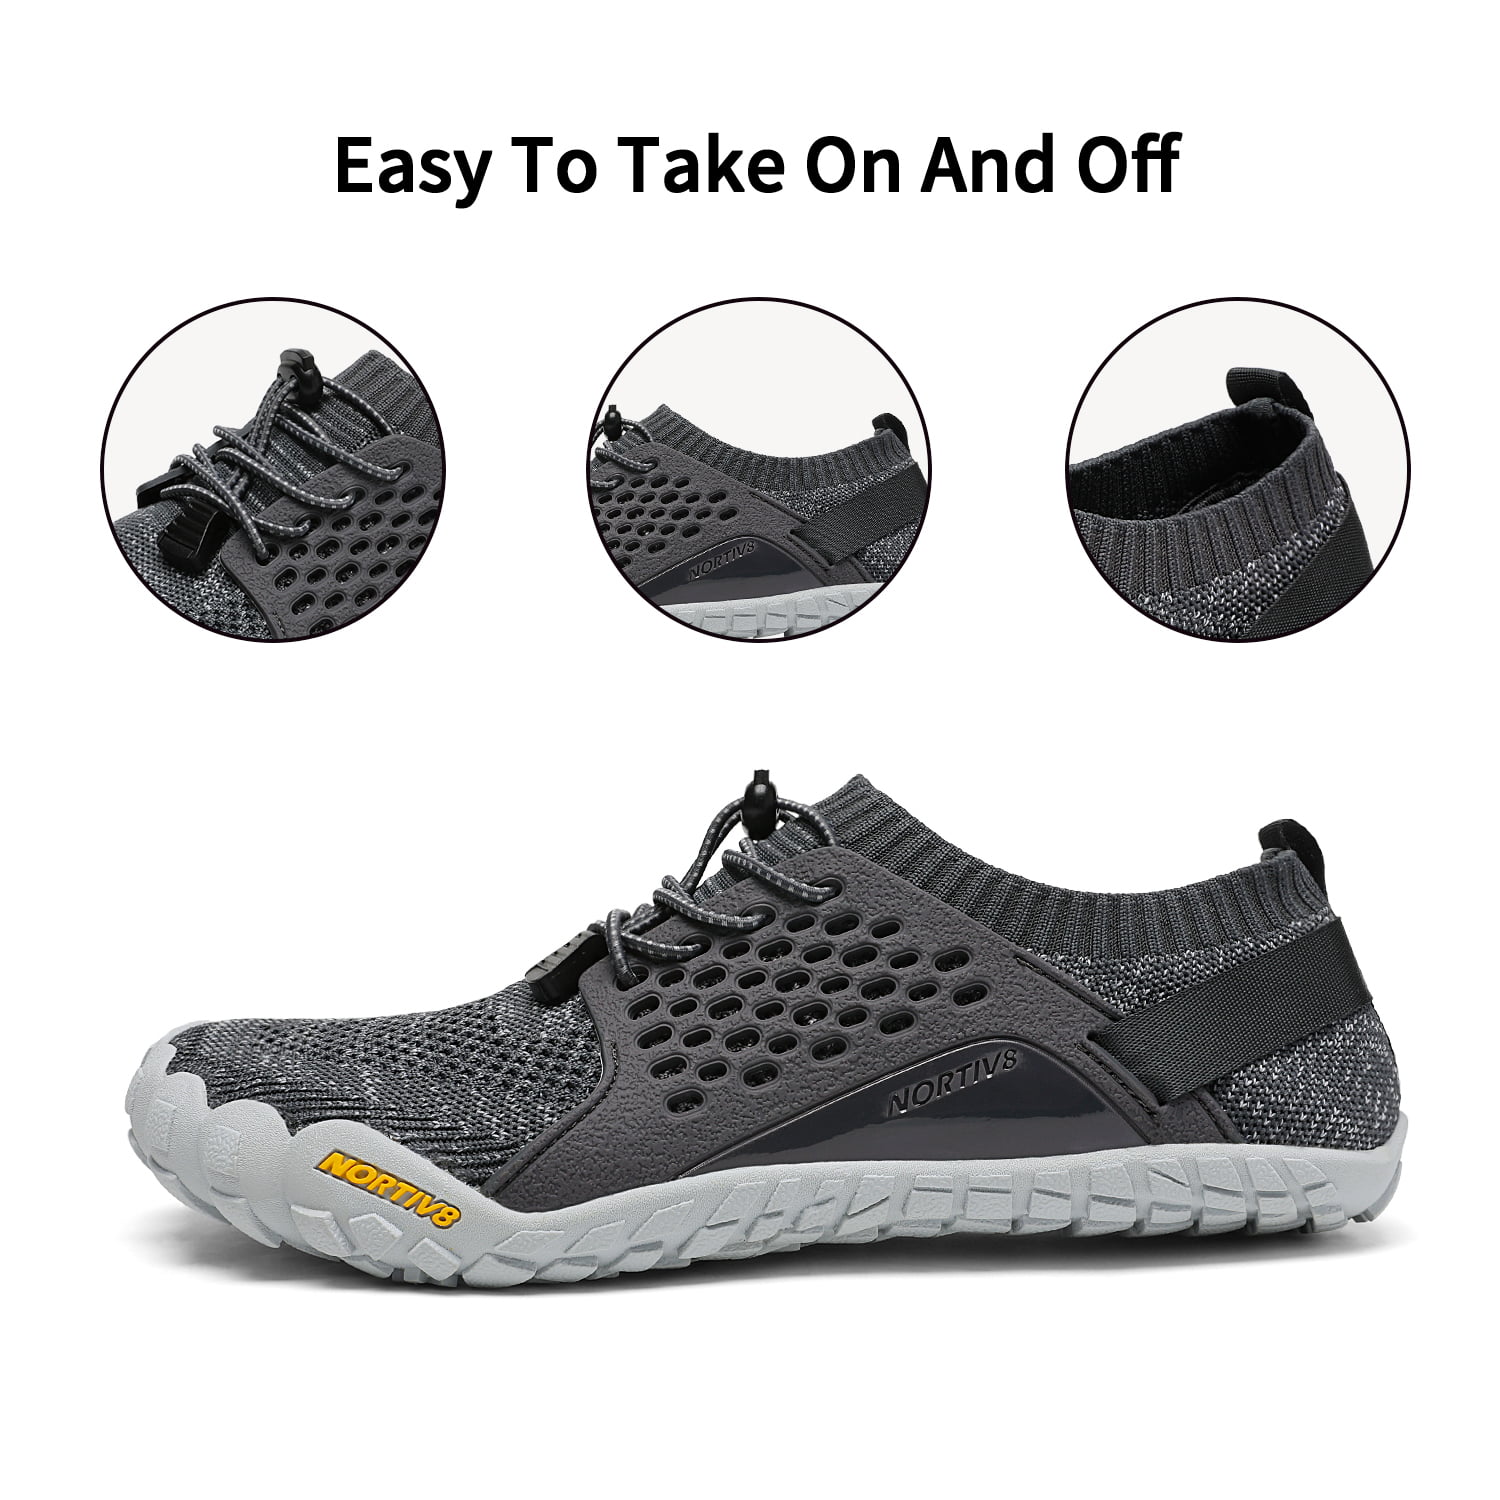 NORTIV 8 Men's Barefoot Water Shoes Quick Dry Aqua Socks TREKMAN-2